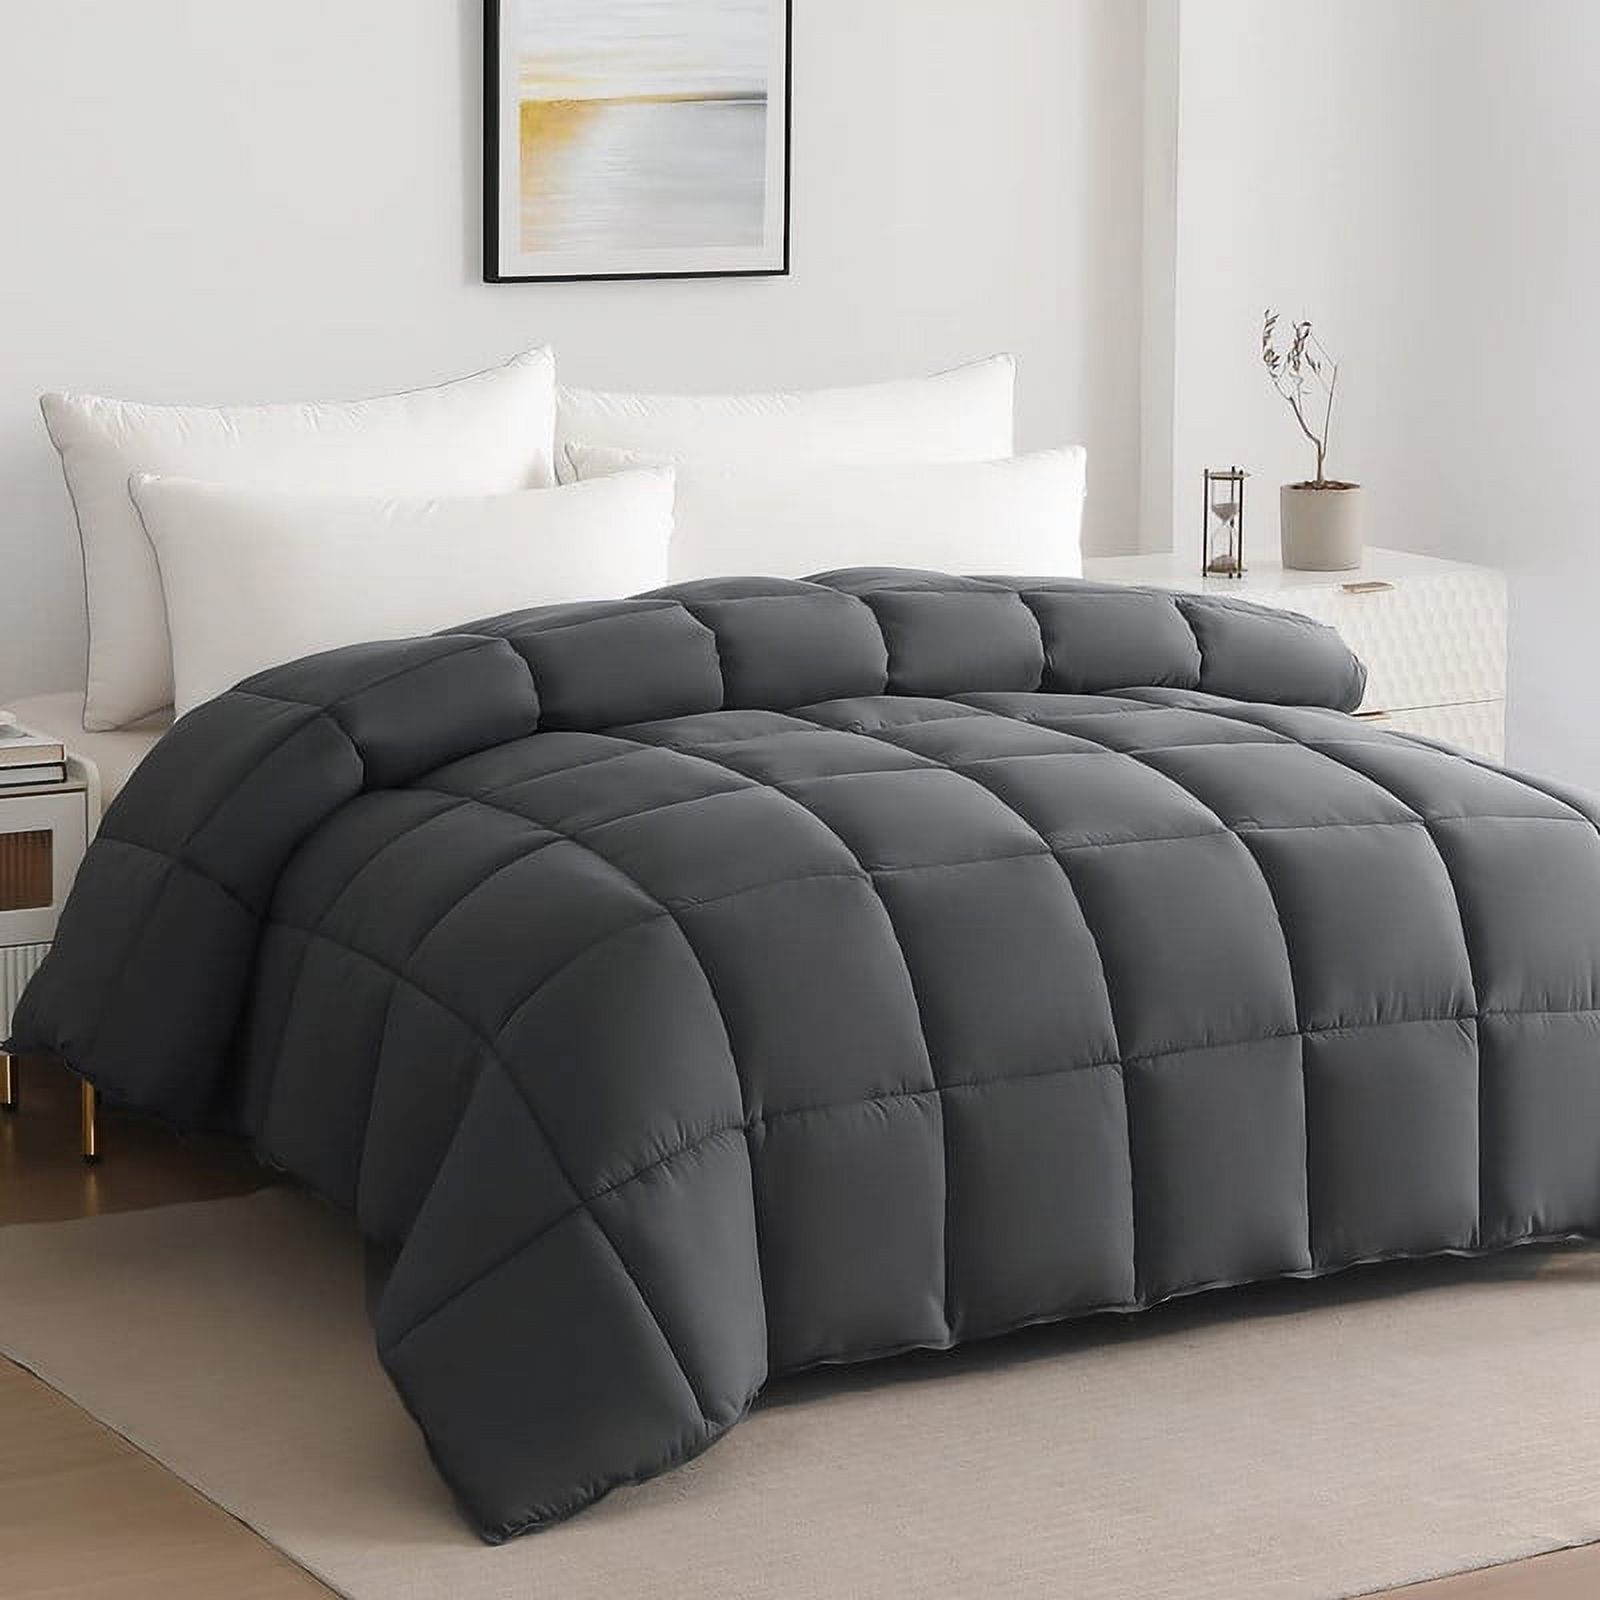 Serwall Luxury Solid Down Alternative Machine Washable Gray Comforters, Queen - image 1 of 7